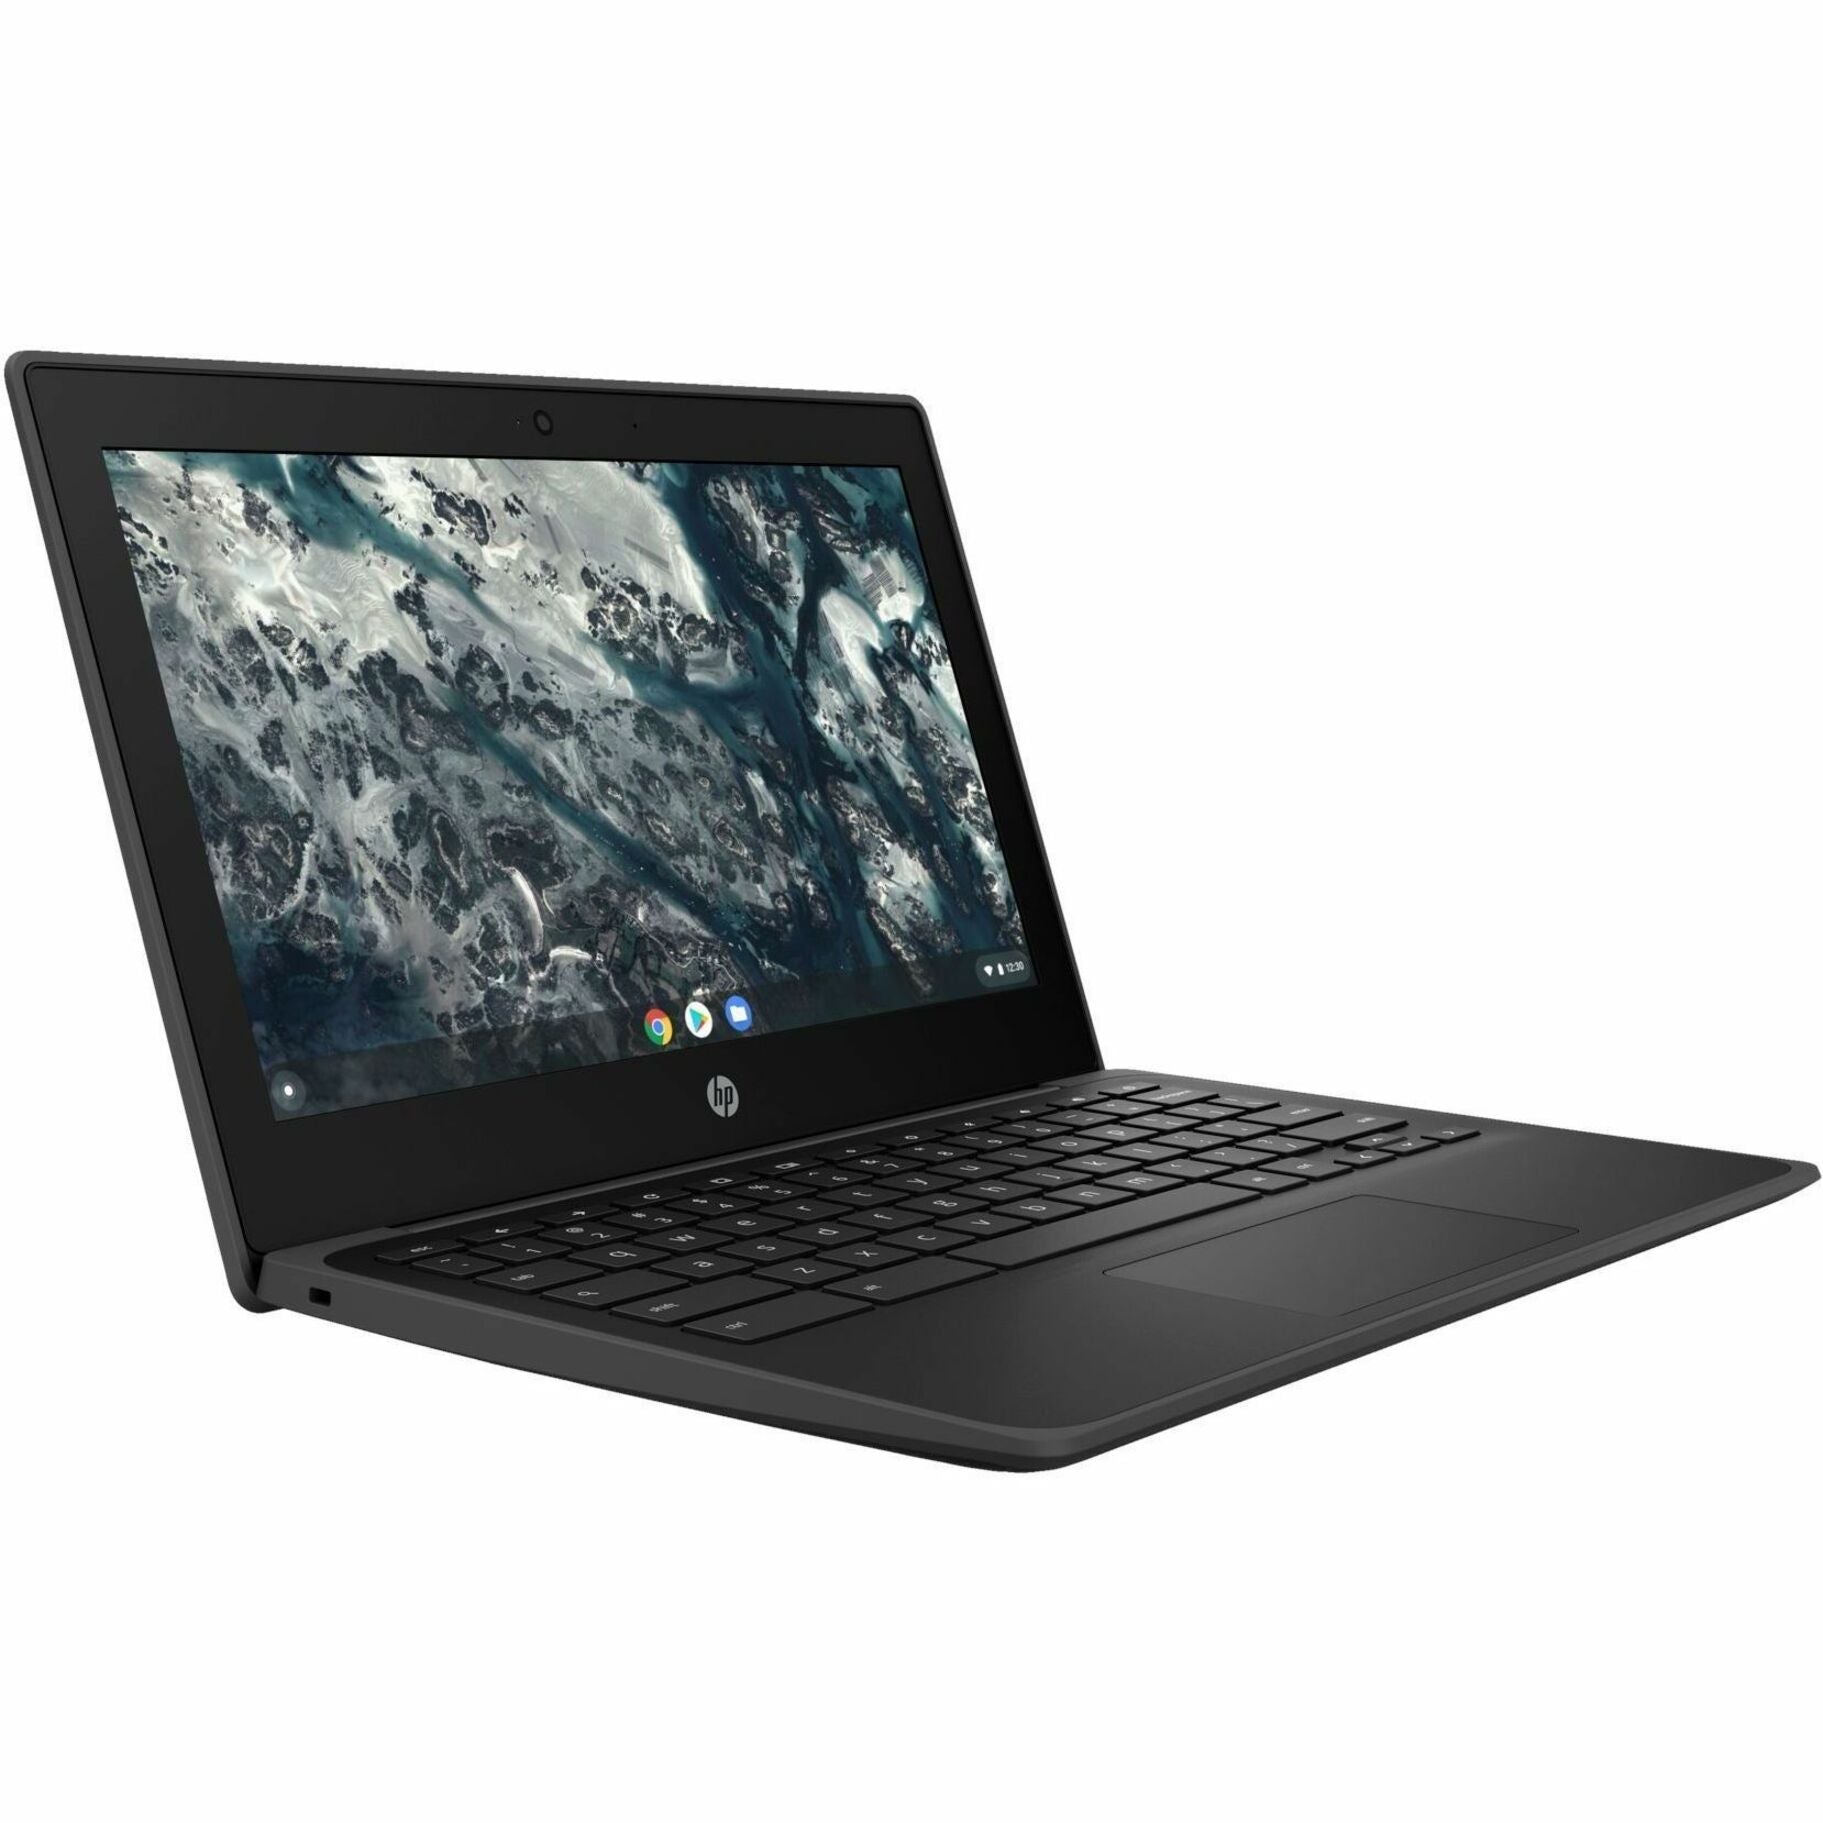 HPI SOURCING - NEW Chromebook 11MK G9 EE 11.6" Chromebook, HD, Octa-core, 4GB RAM, 32GB Flash Memory